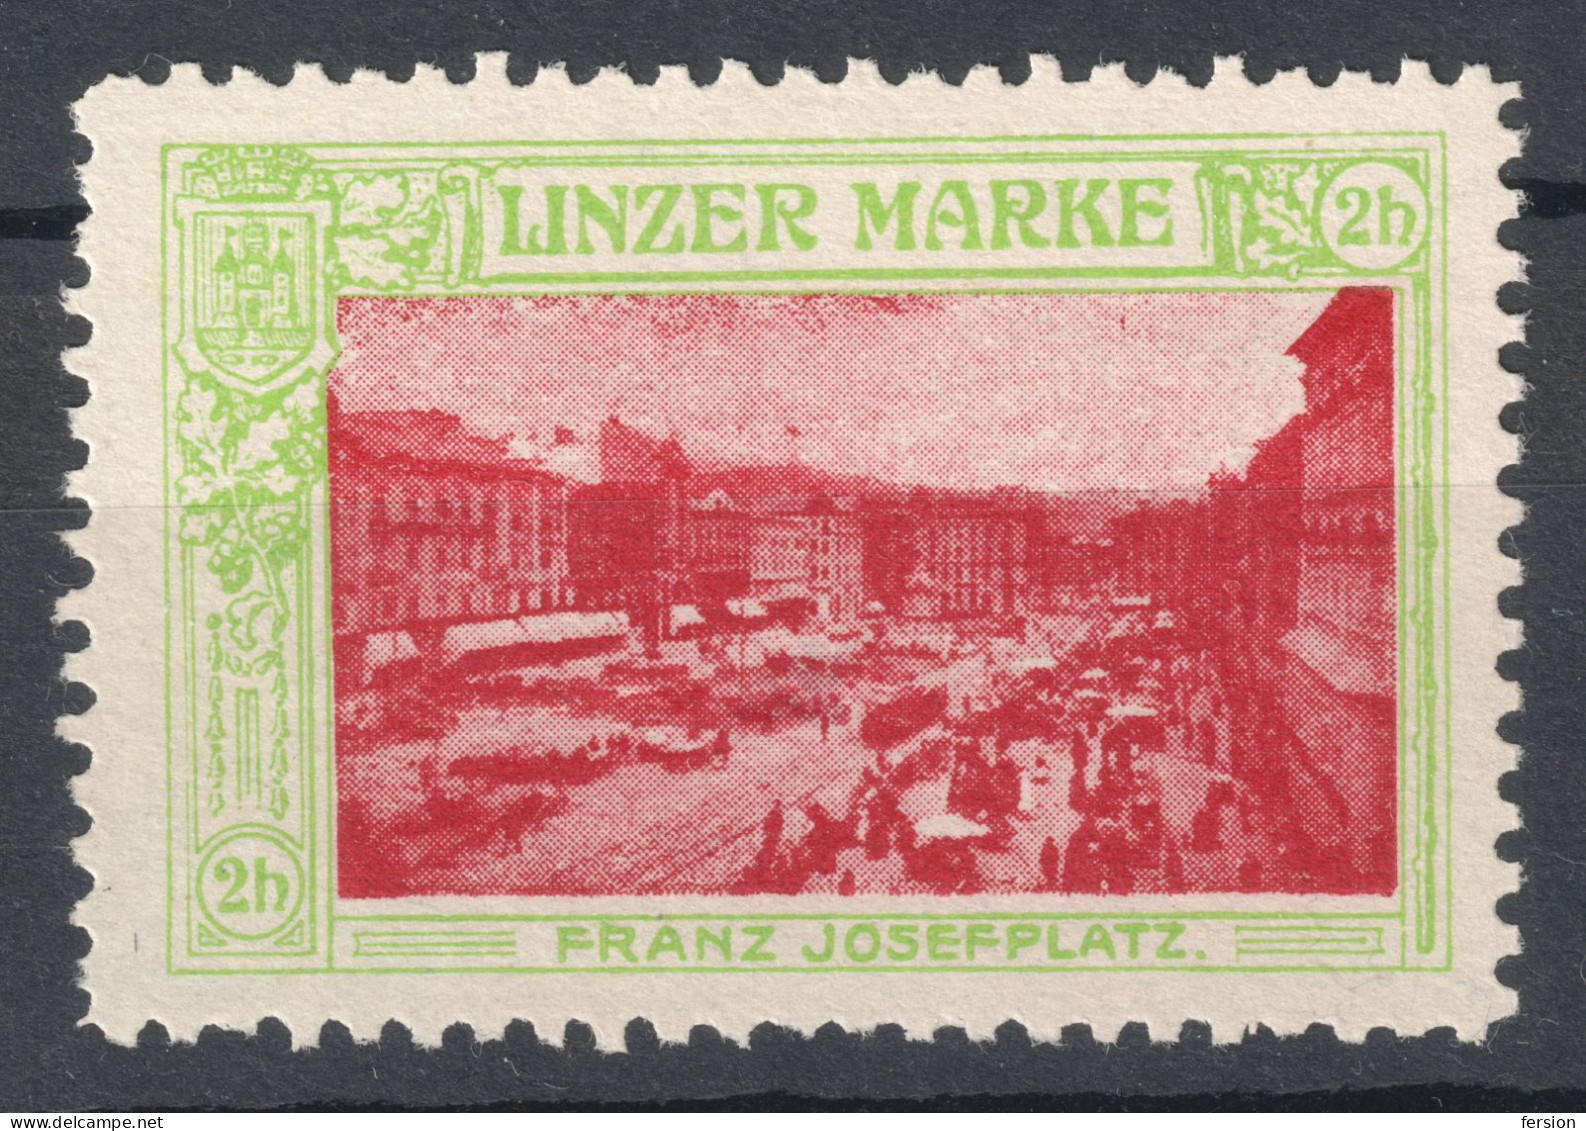 TRAM TRAMWAY Franz Joseph SQUARE - City LINZ 1910 Austria Charity Label Cinderella Vignette / LINZER MARKE - Tramways